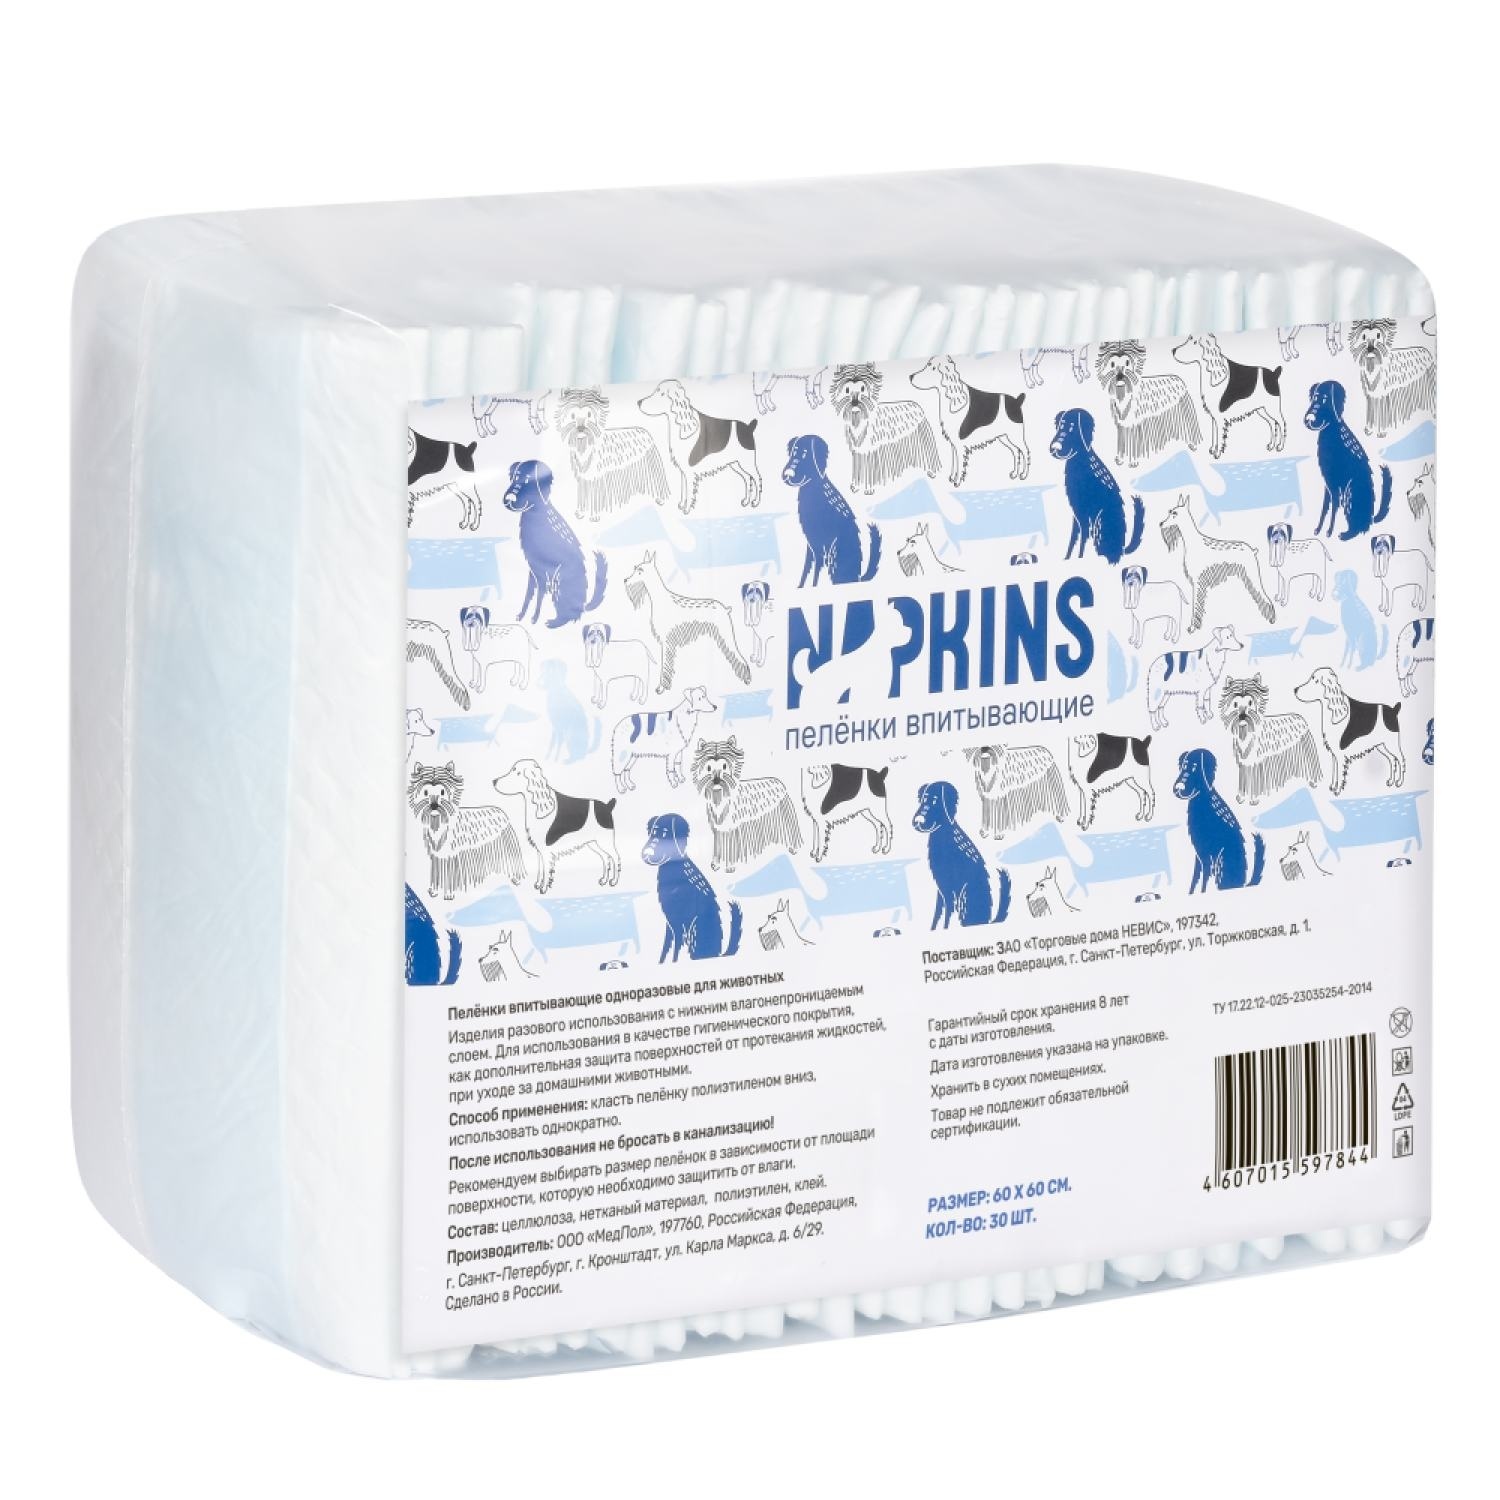 NAPKINS NAPKINS впитывающие пелёнки с целлюлозой для собак 60х60 (200 г) napkins napkins гелевые пелёнки для собак 60х60 30 шт